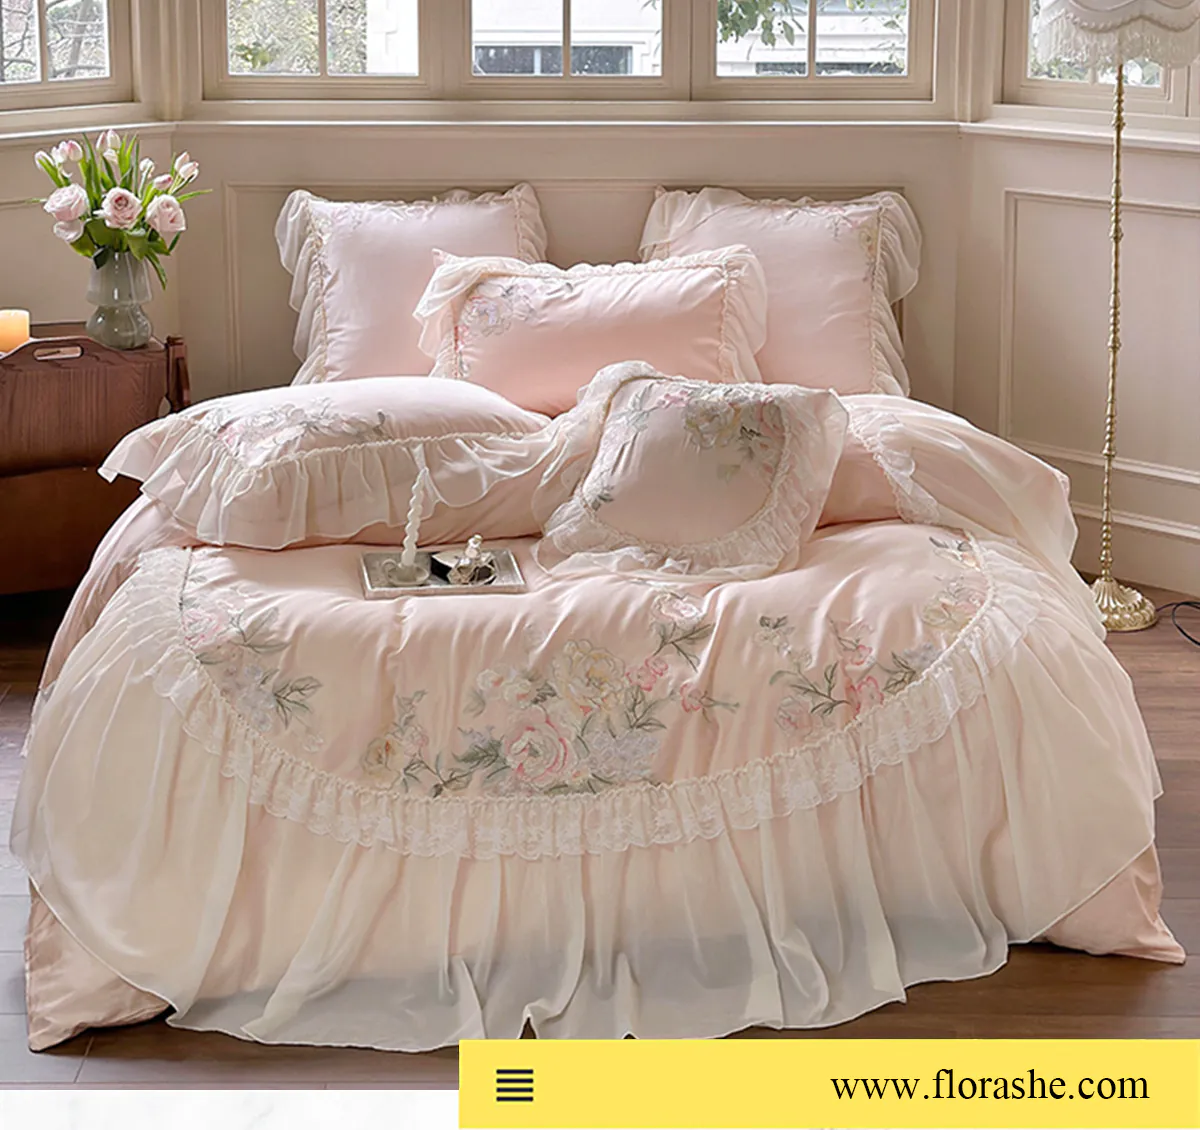 Luxury-Long-Staple-Cotton-Embroidery-Ruffle-Lace-Trim-Bedding-Set20